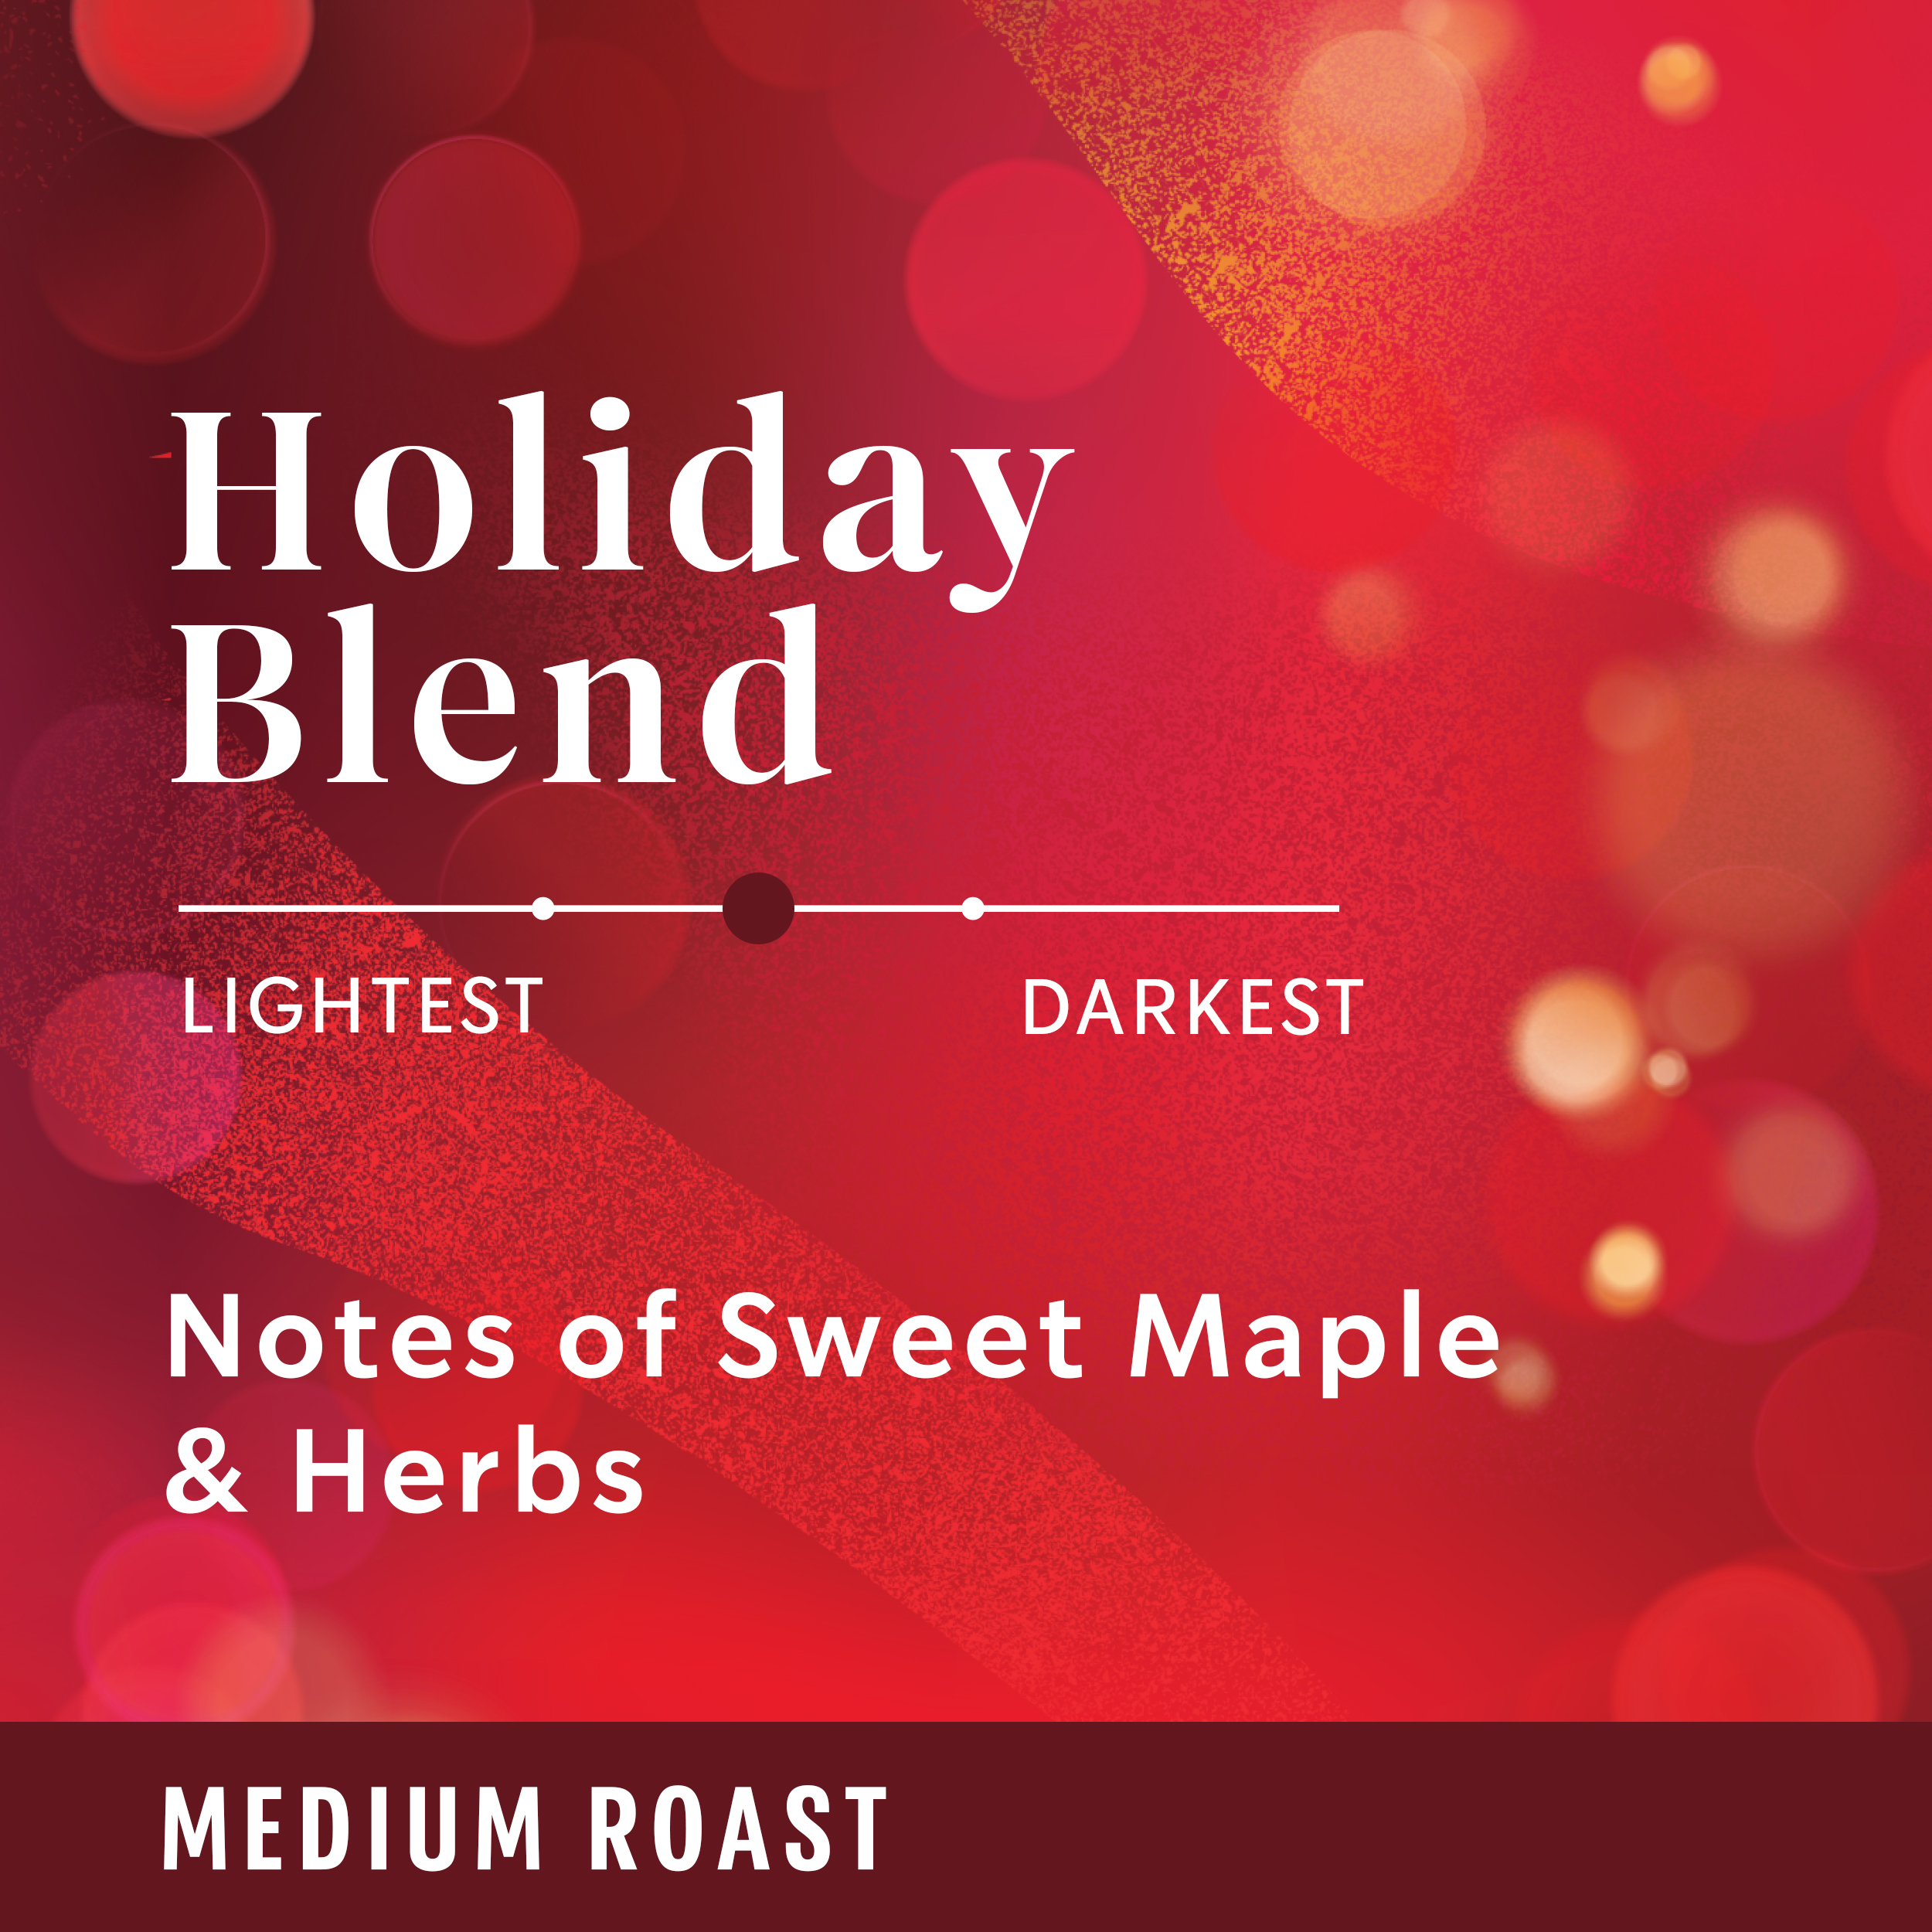 Starbucks Holiday Blend, Medium Roast K-Cup Coffee Pods, 100% Arabica, 1 Box (22 Pods) - image 4 of 9